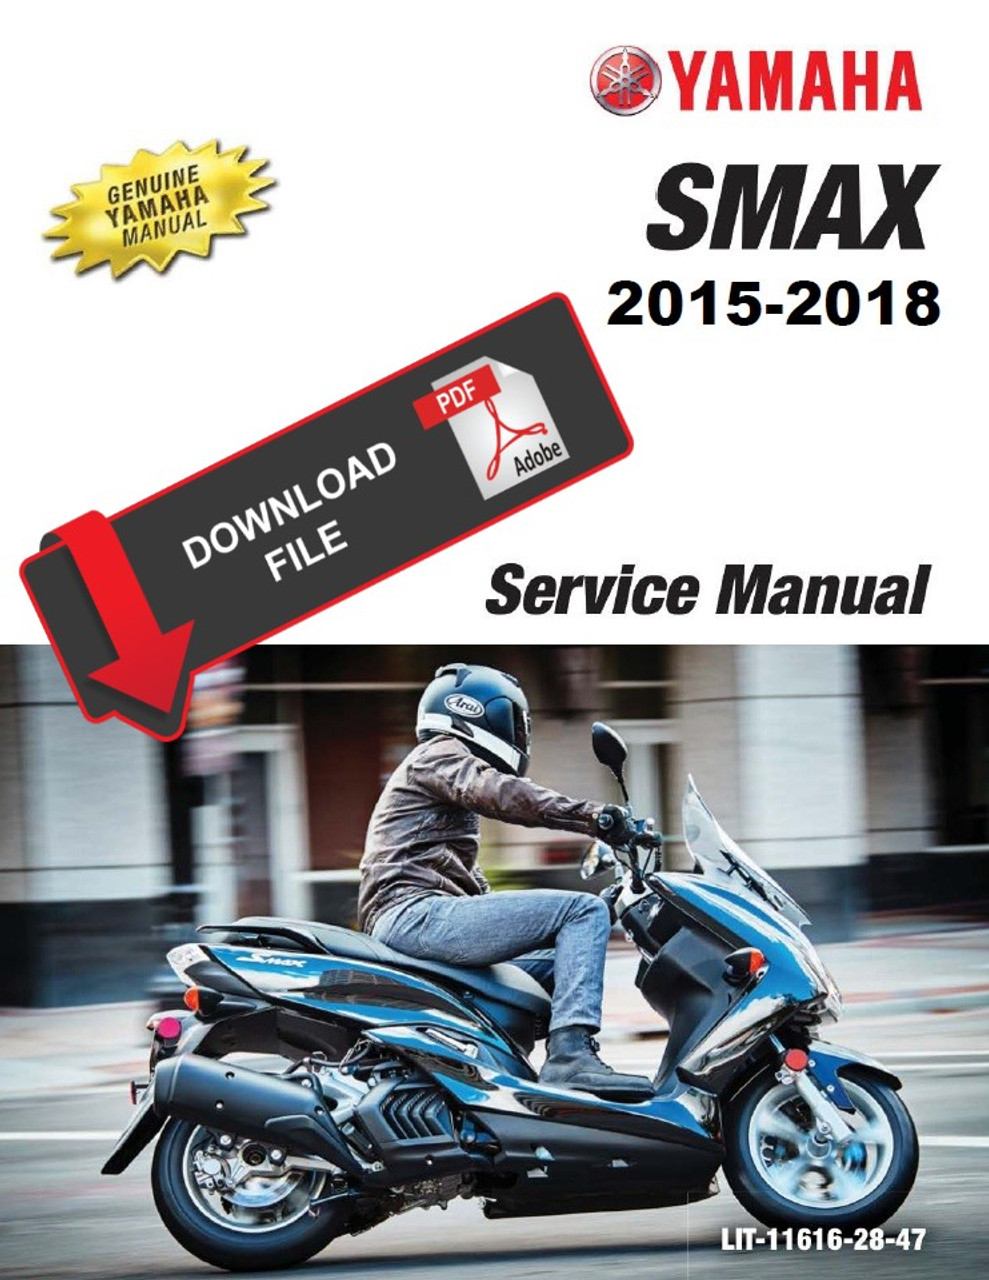 Sag Folkeskole Tag fat Yamaha 2018 SMAX Scooter Service Manual